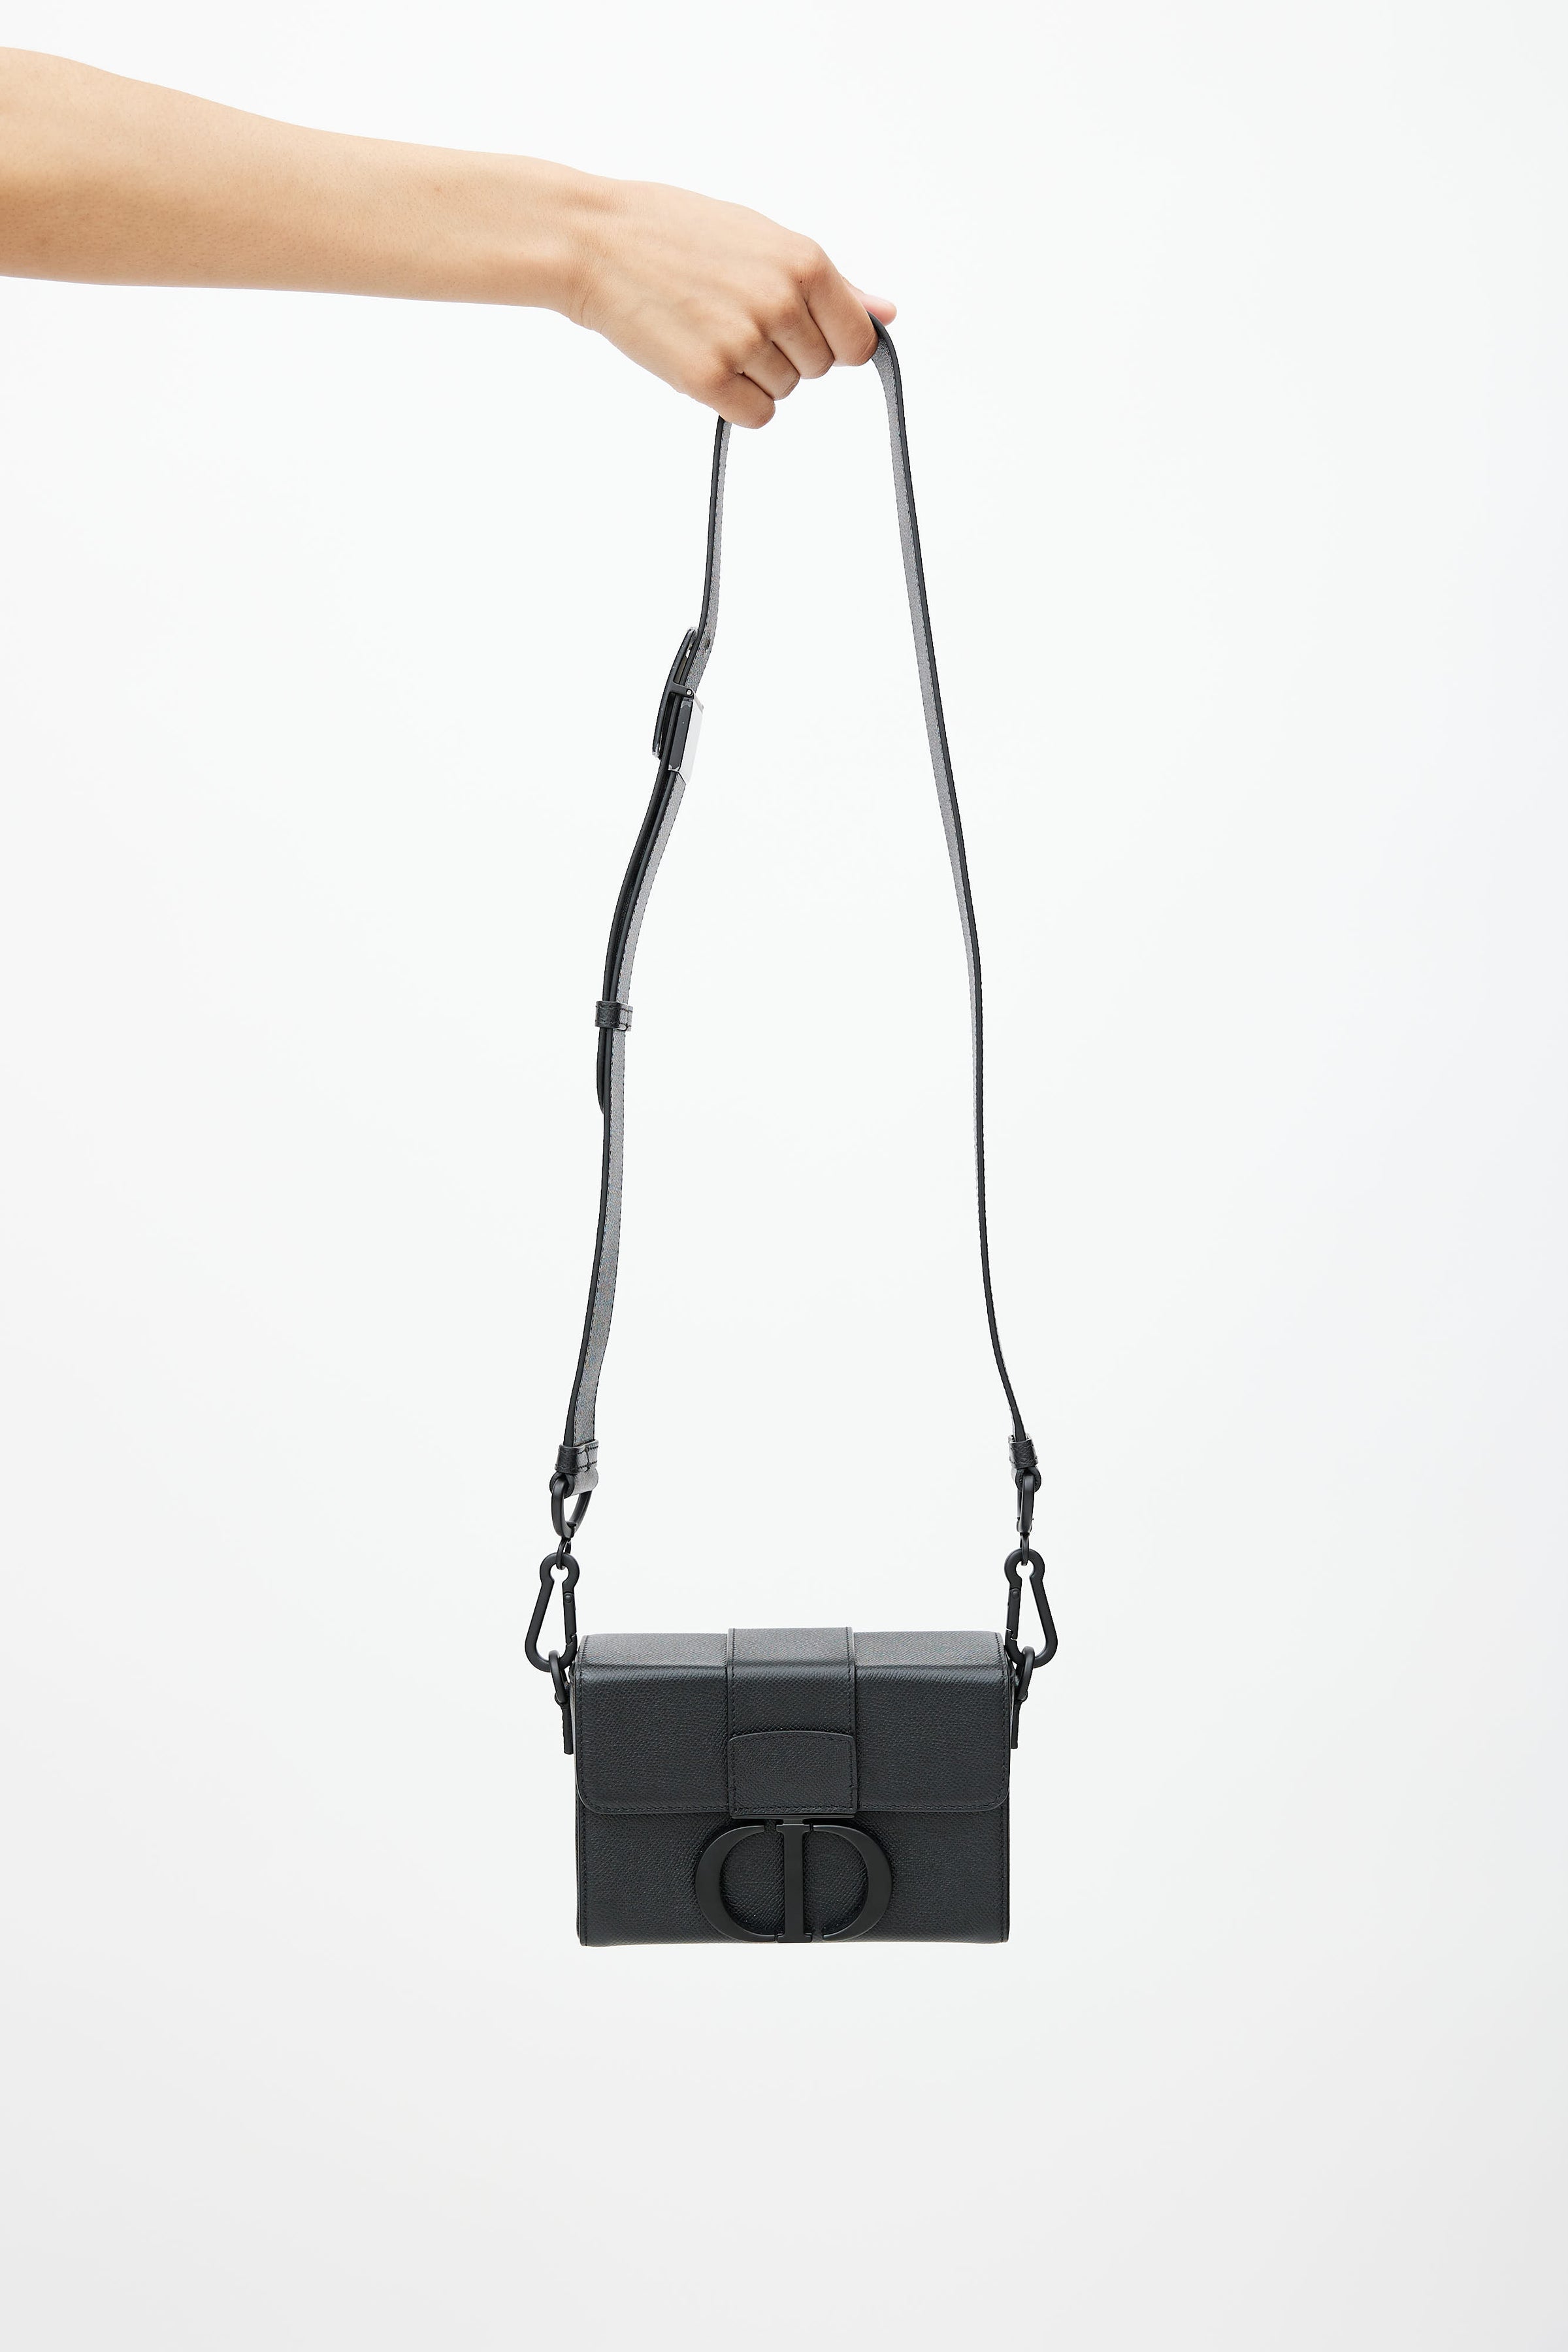 Dior 30 Montaigne Box Leather Shoulder Bag